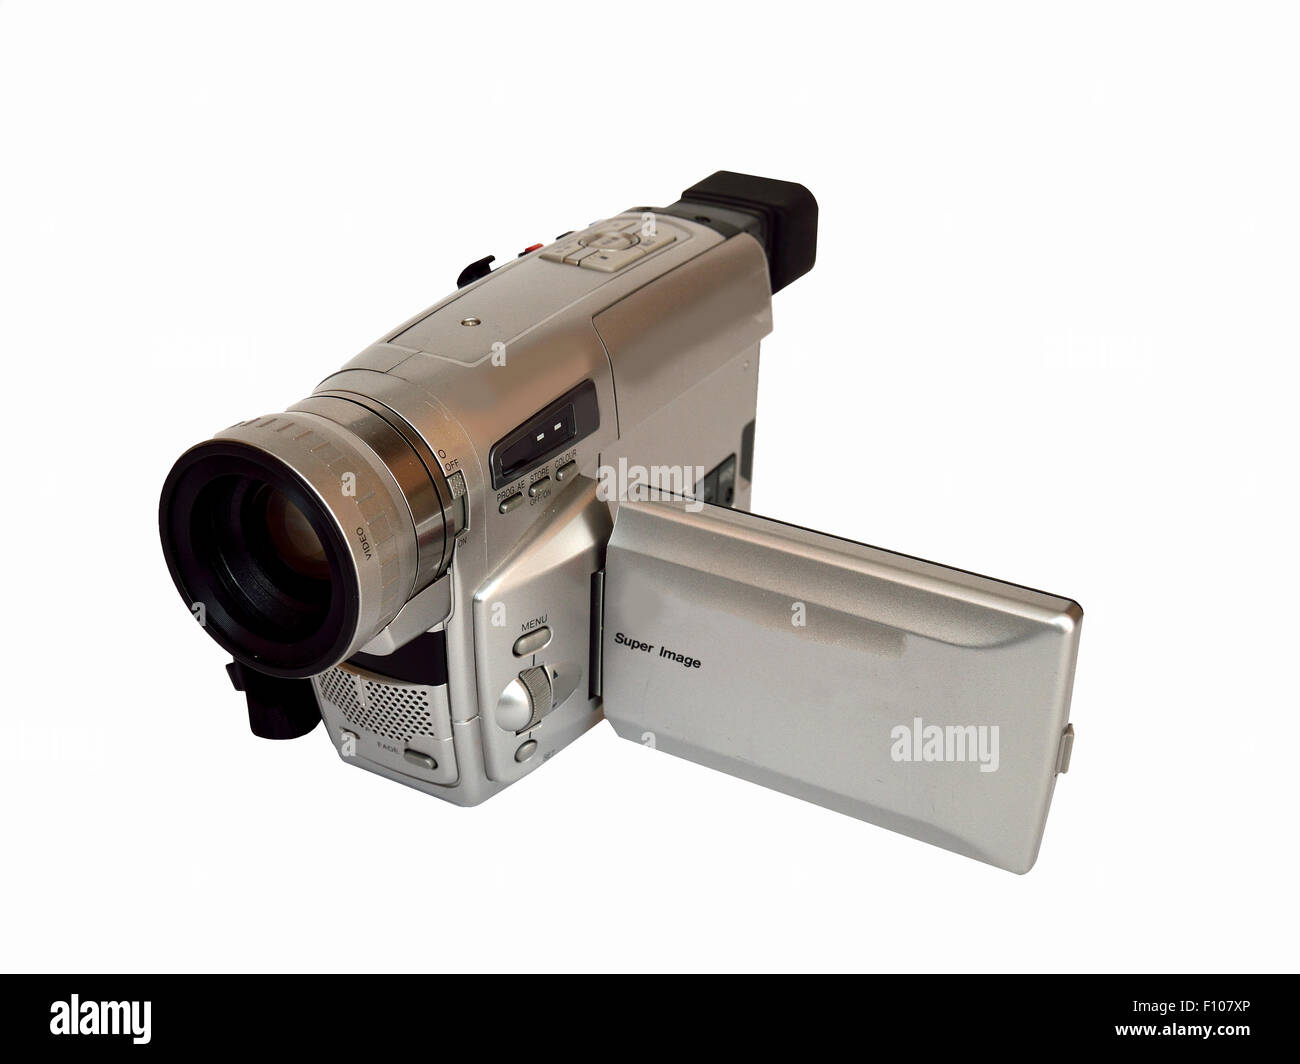 Analog camcorder Stock Photo - Alamy